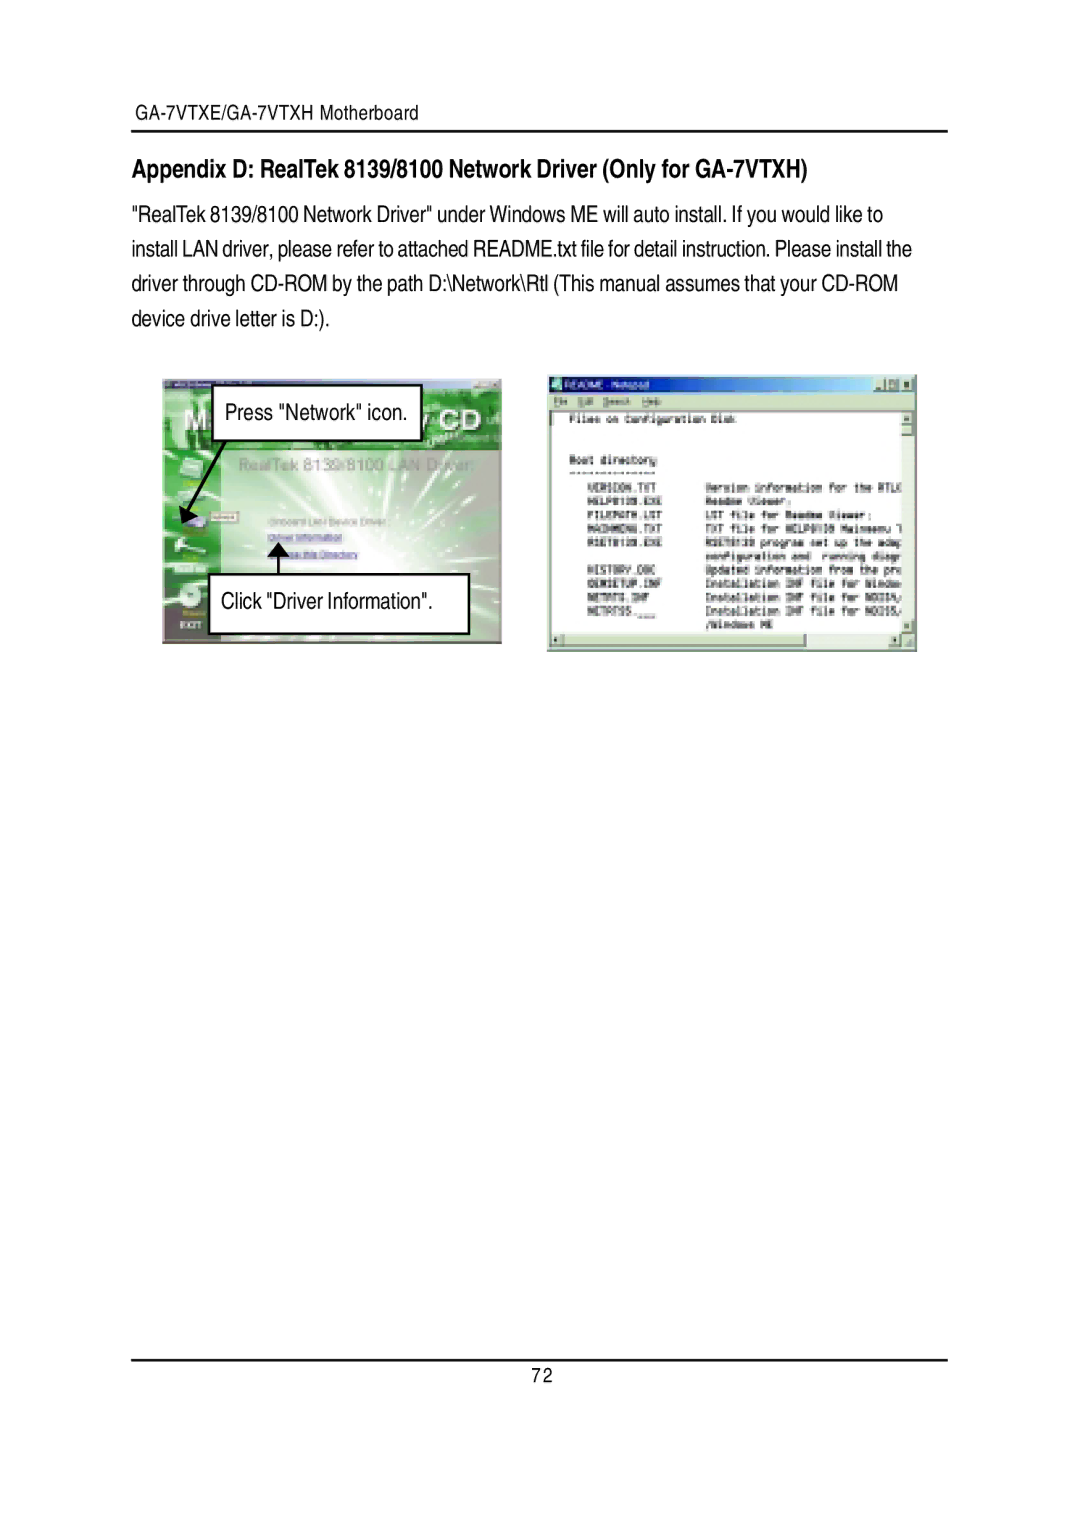 Gigabyte GA-7VTXE, GA-7VTXH warranty Press Network icon Click Driver Information 